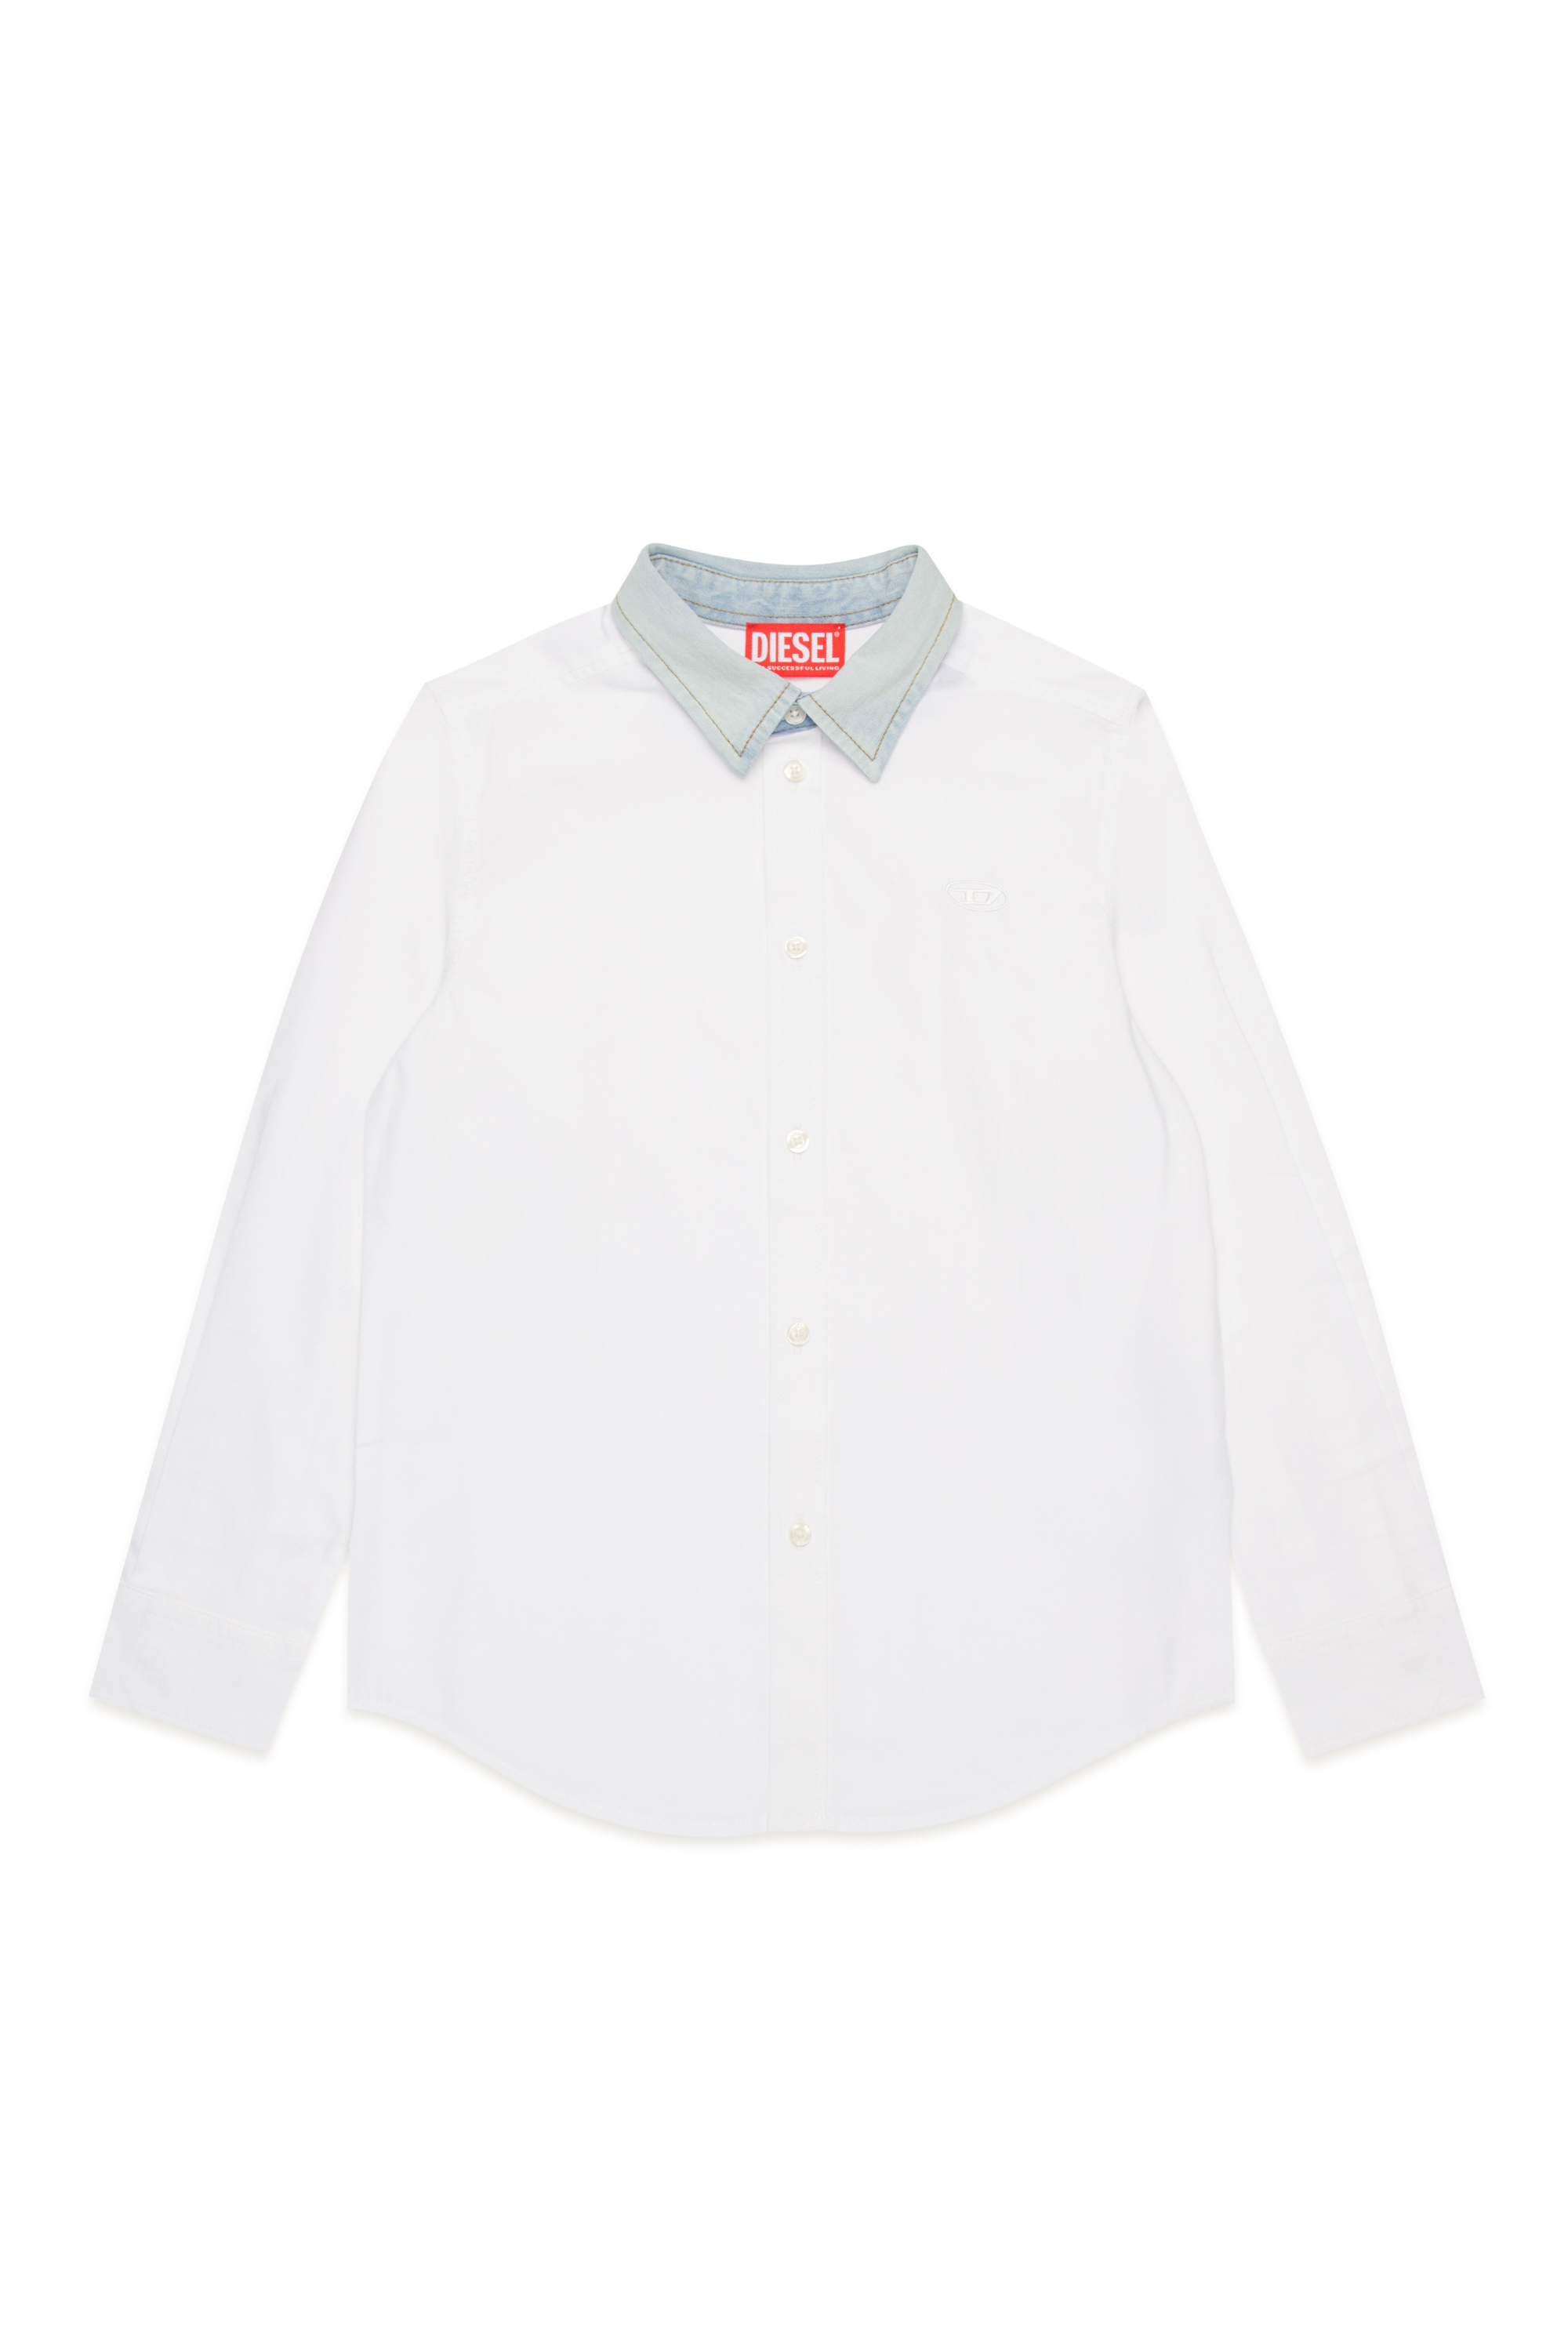 Diesel - CSHOLLS, Man Long-sleeve shirt with denim collar in White - Image 1